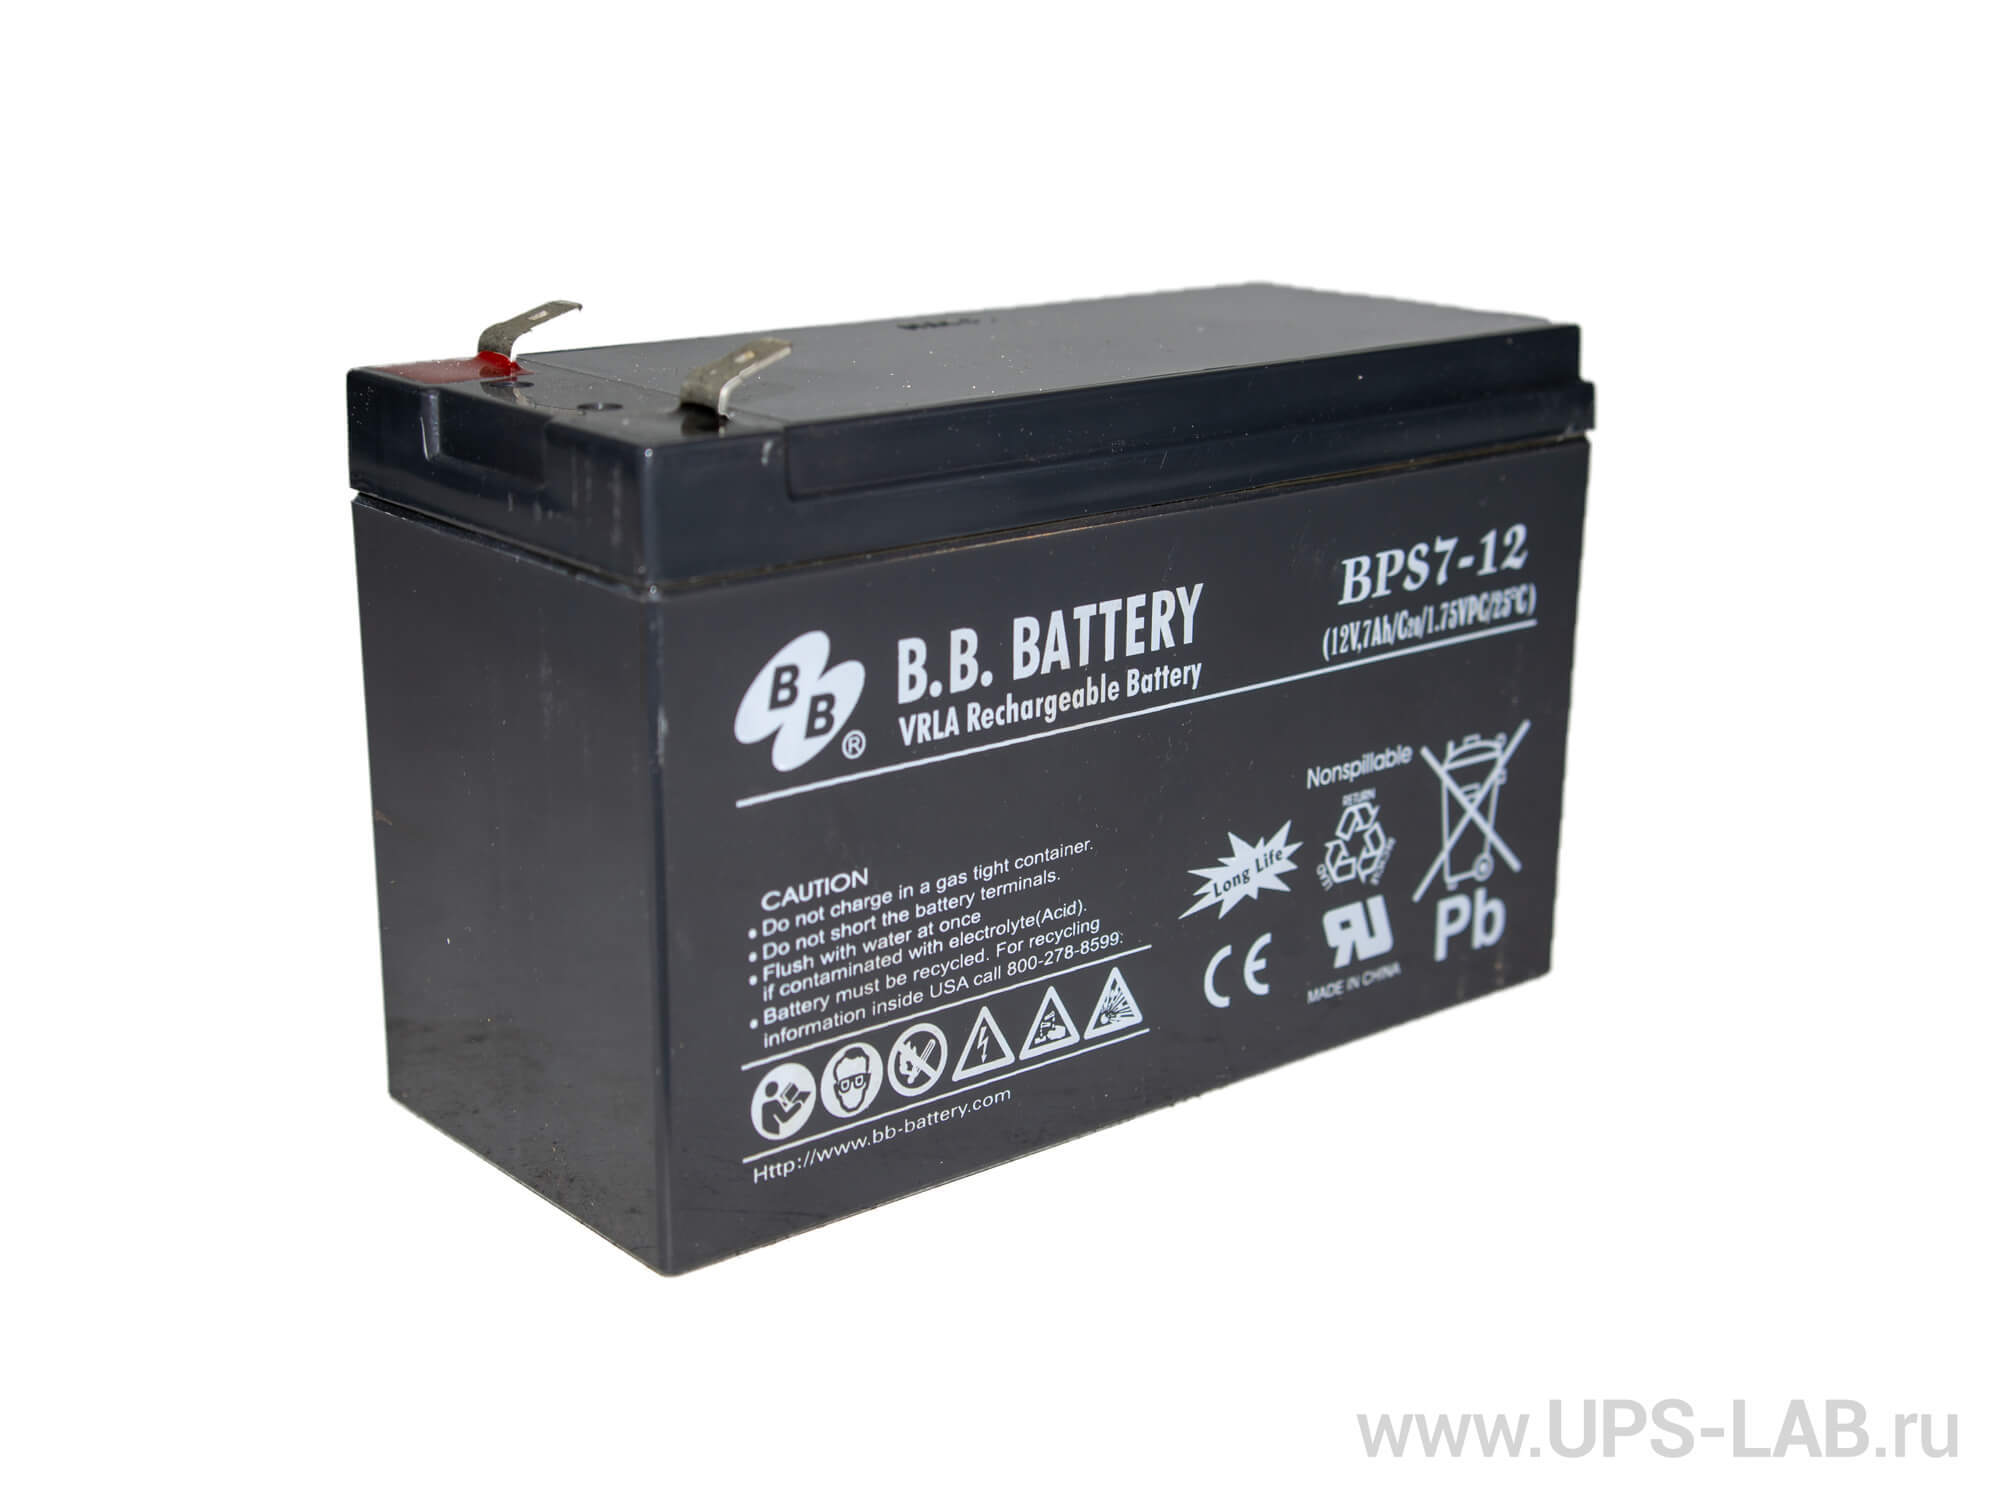 Ptk battery 12 12. Аккумулятор для ИБП 12v 7ah b.b. Battery bc7-12. PTK-Battery АКБ 12v - 12ah. АКБ BB Battery BC 7-12. Батарея аккумуляторная PTK-Battery 12-7 ПОЖТЕХКАБЕЛЬ.